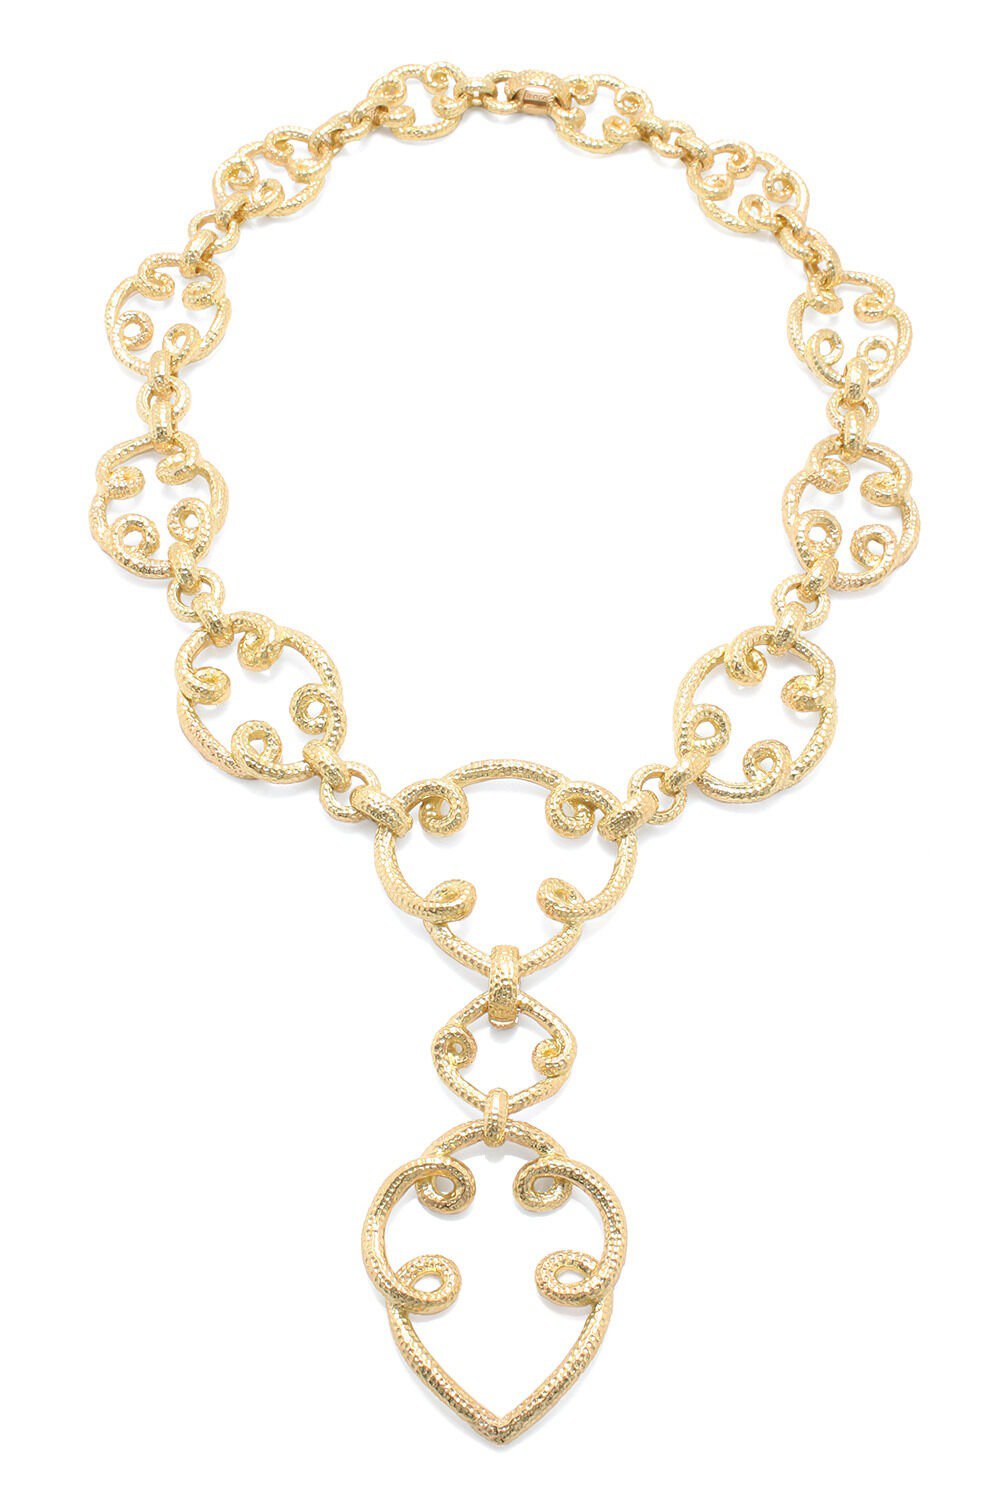 DAVID WEBB-Arabesque Loop Chain Necklace-YELLOW GOLD